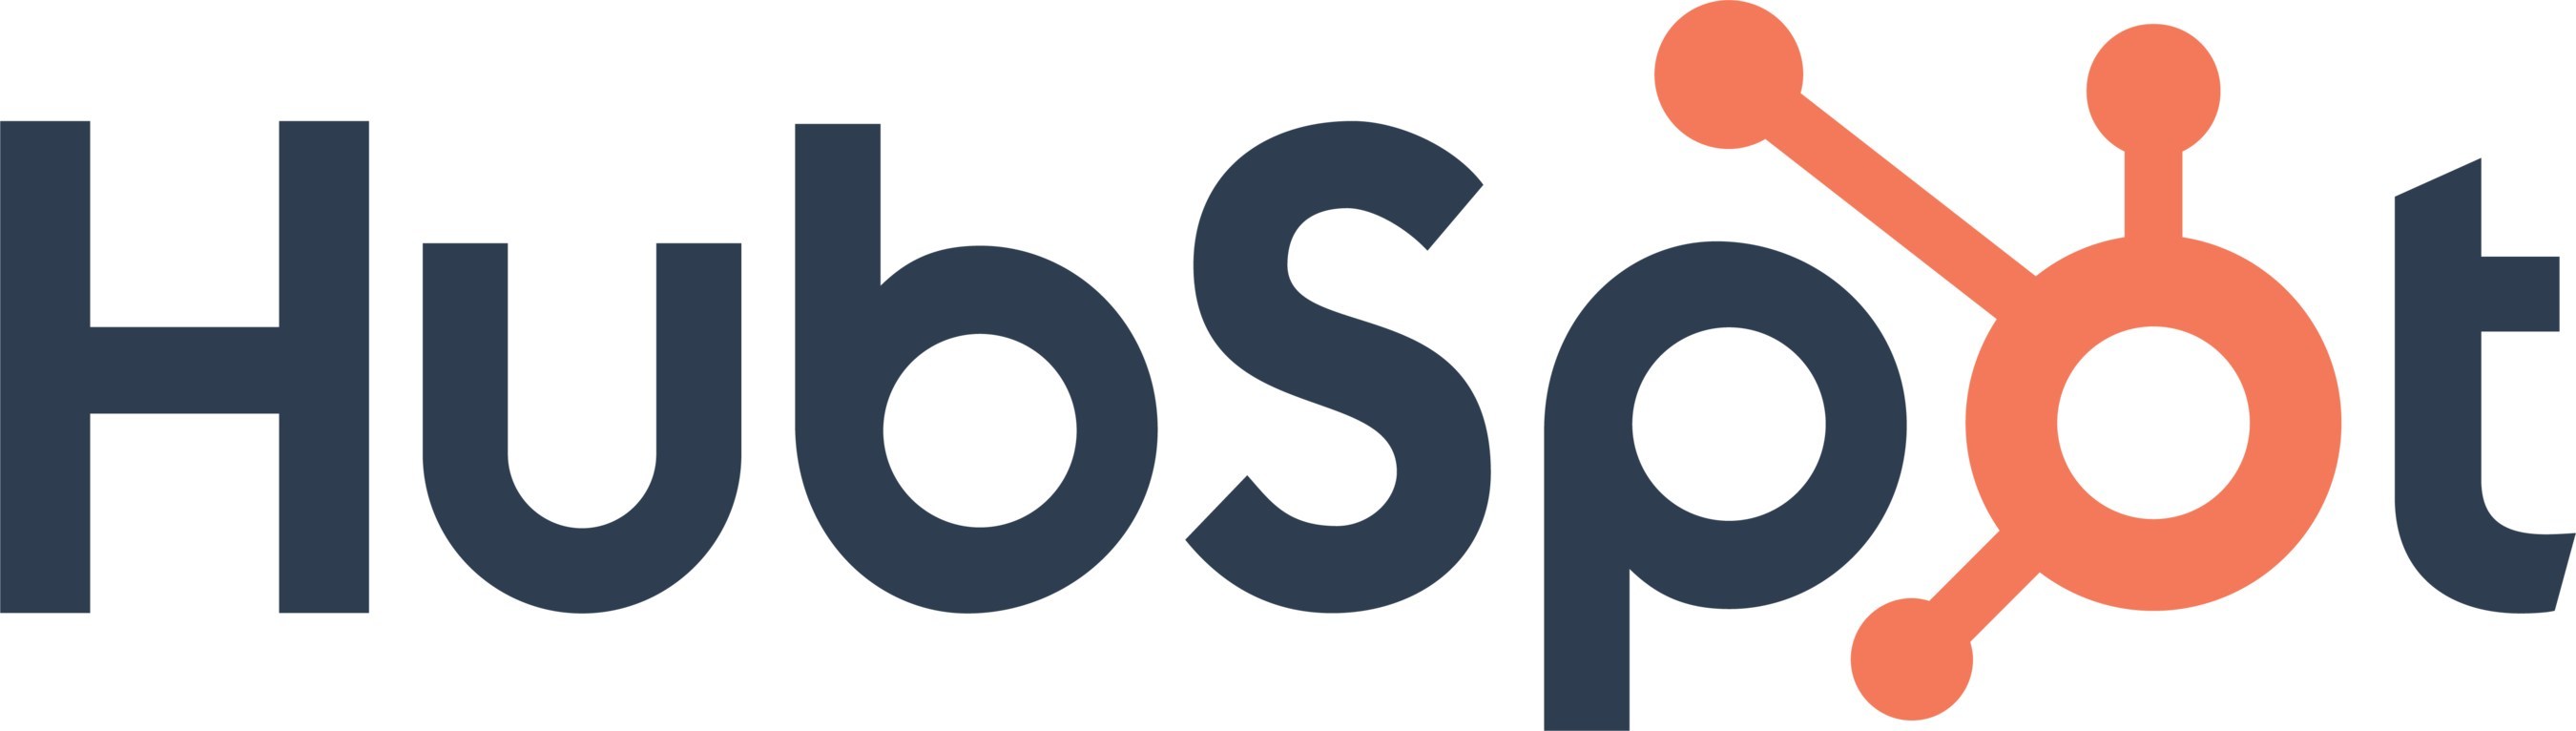 HubSpot Announces Date of Third Quarter 2019 Financial Results Release